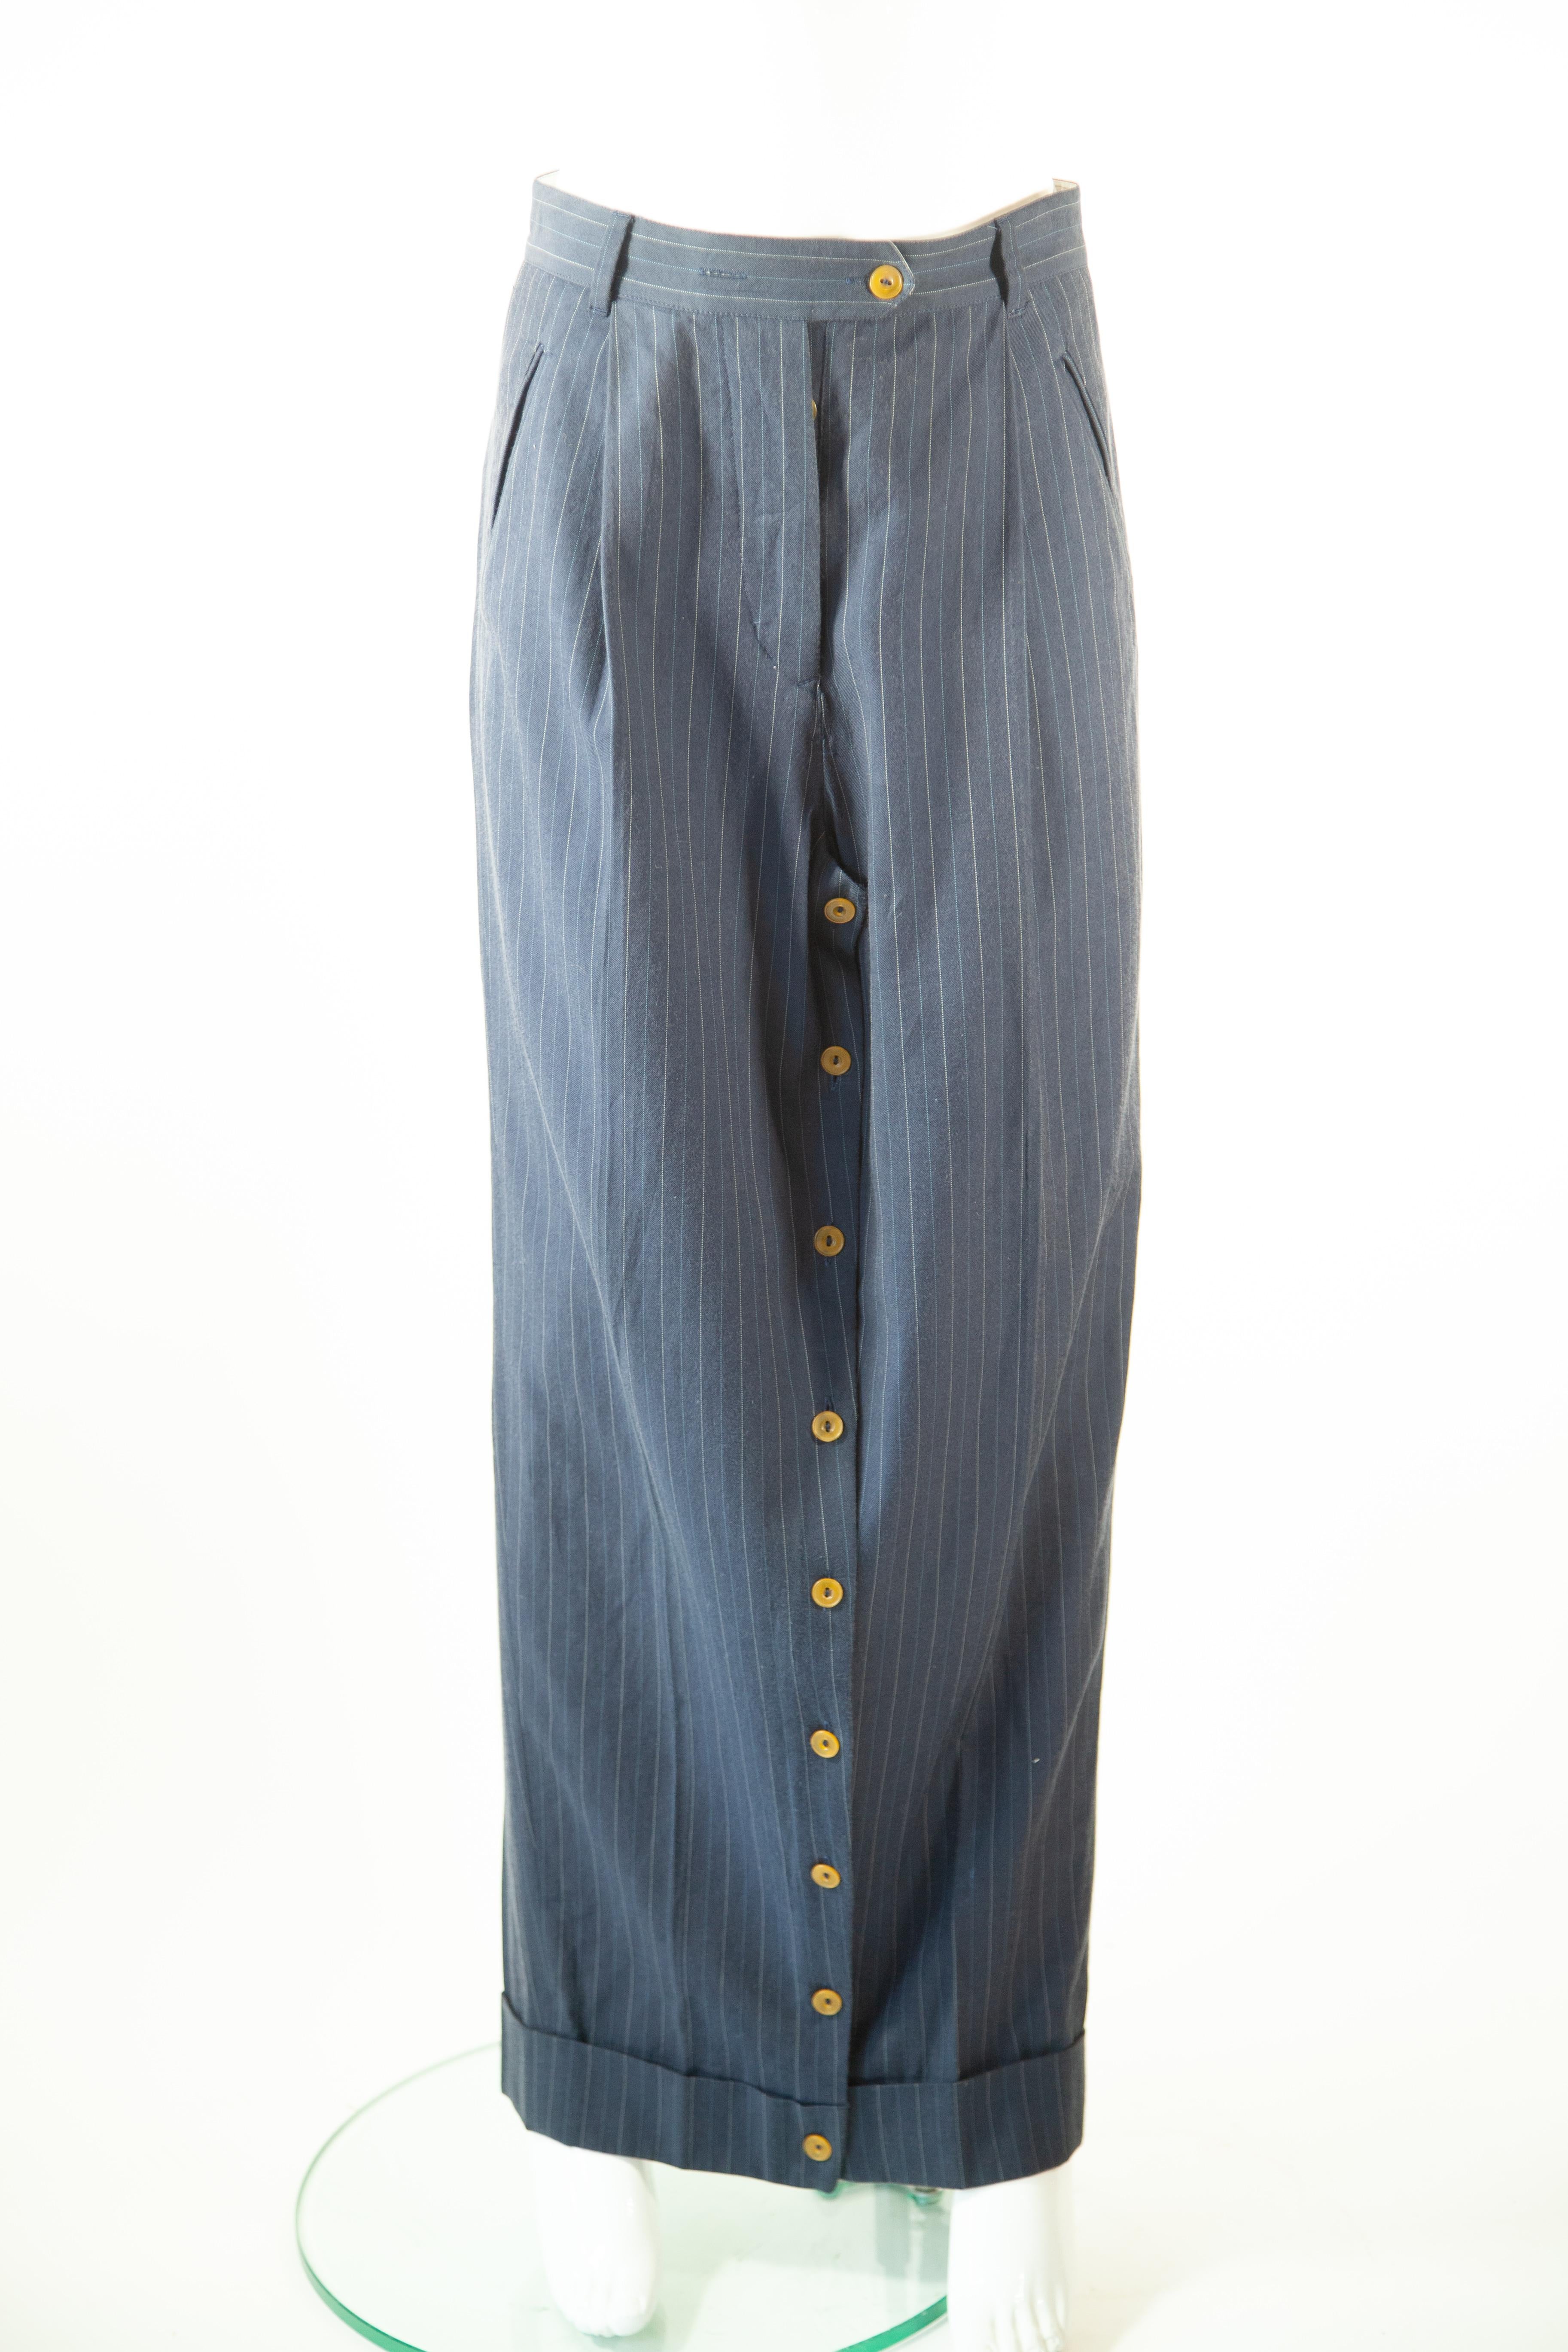 Jean Paul Gaultier Femme Multi-Functional Pants/Skirt 2